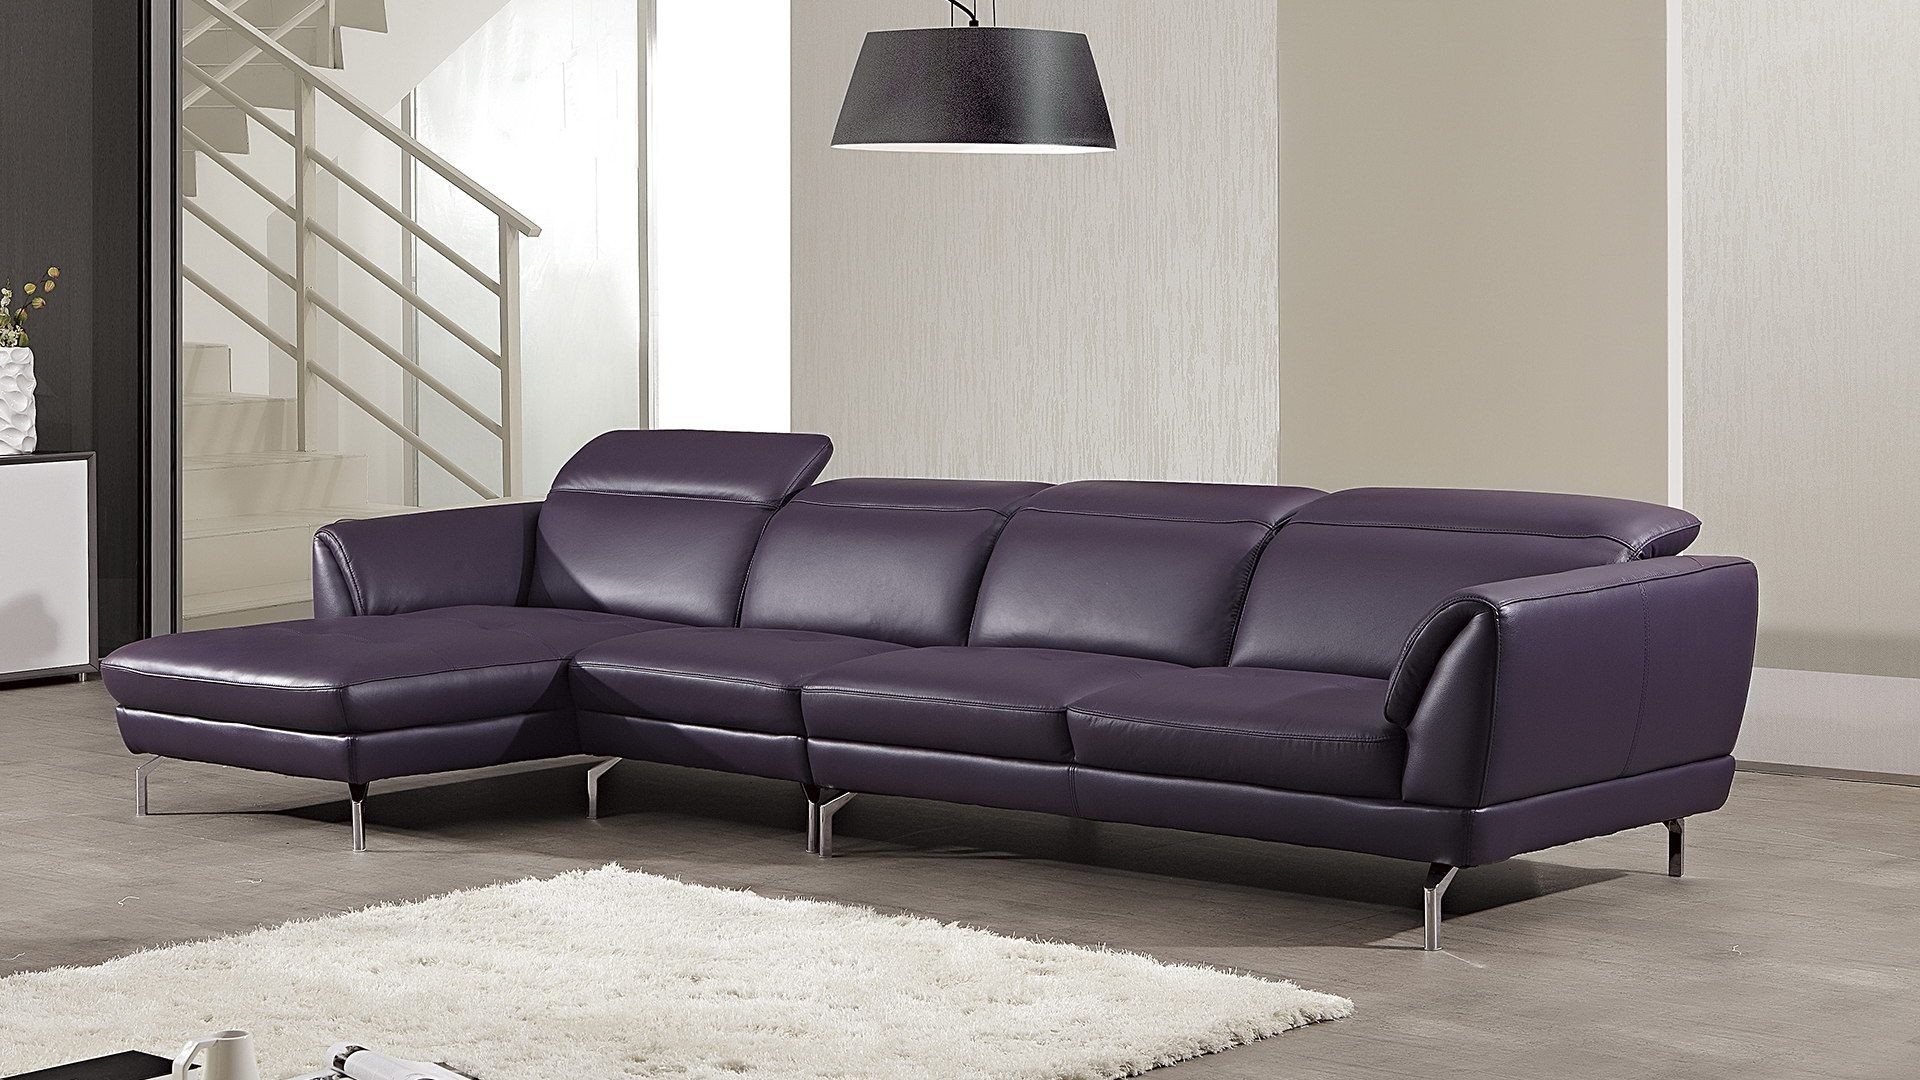 Releve italian purple leather sectional set usa